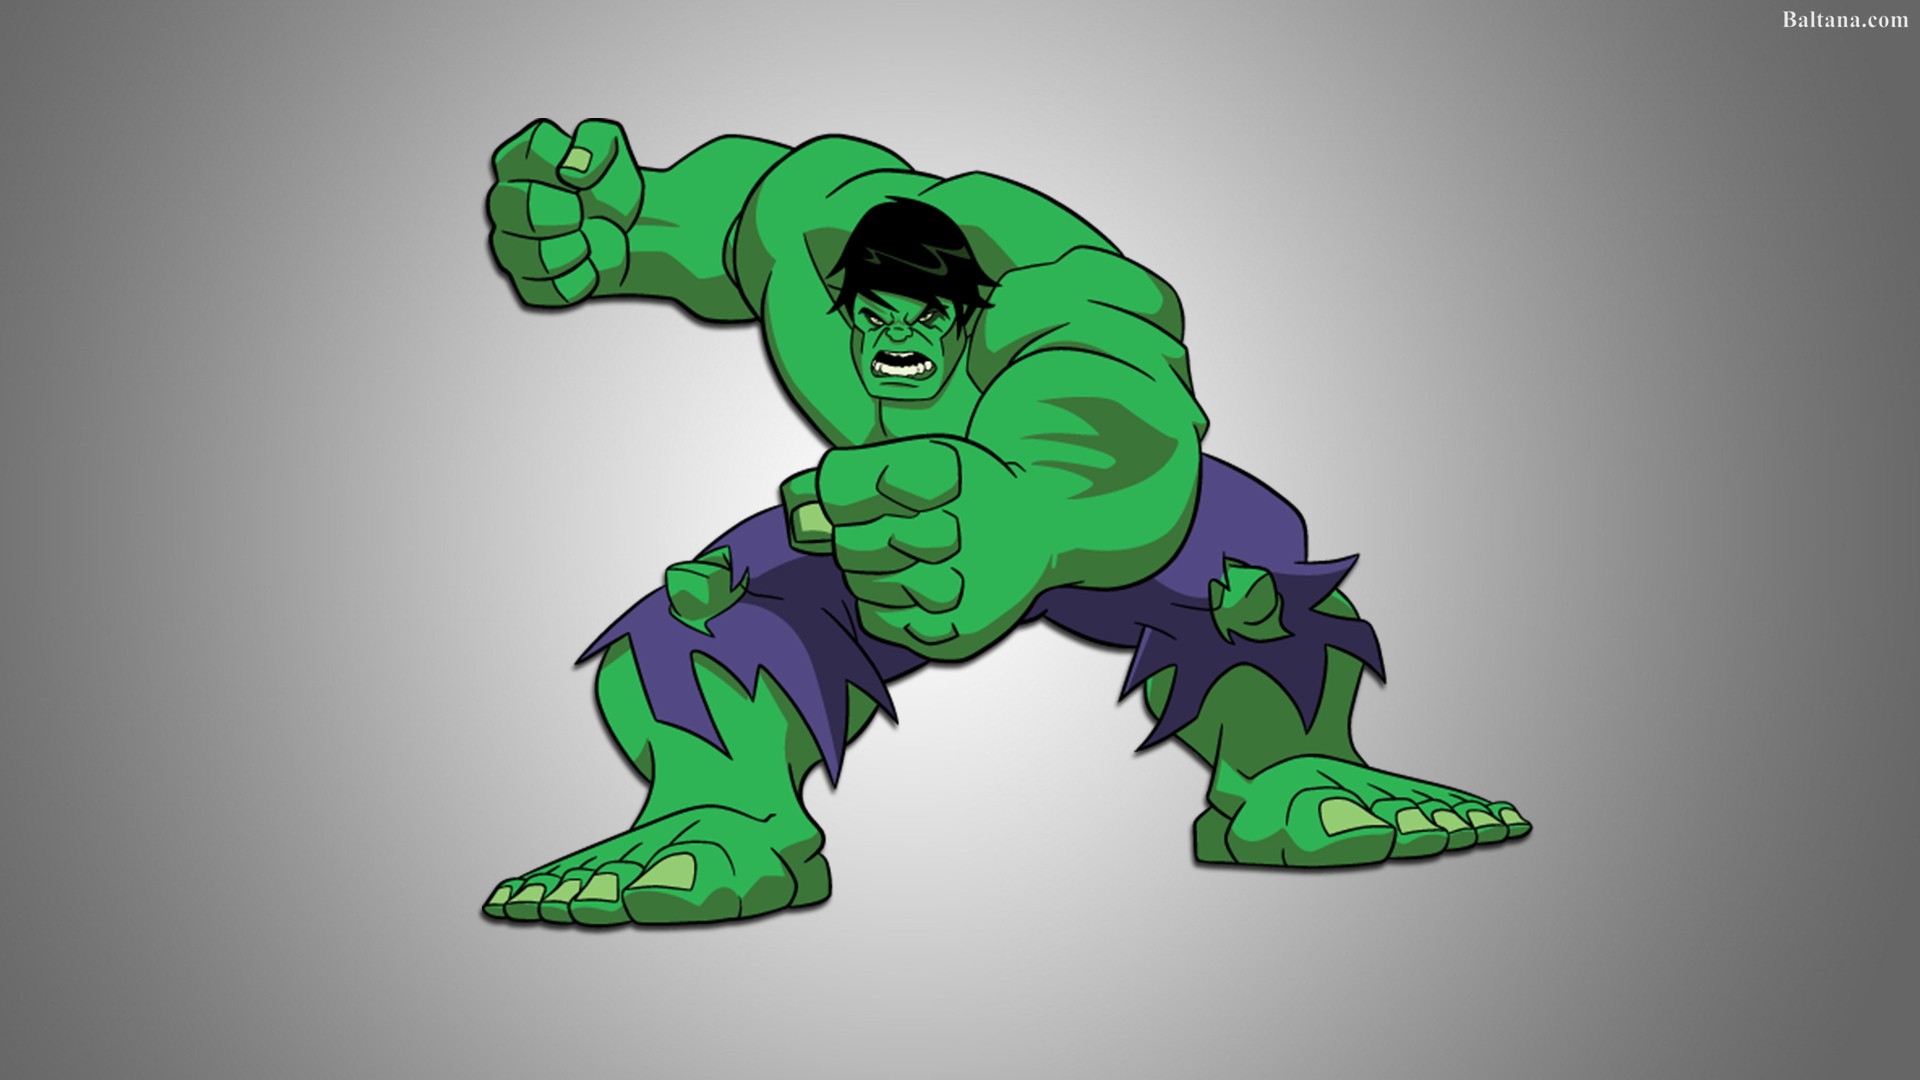 Animated Hulk Wallpaper 33962 - Baltana